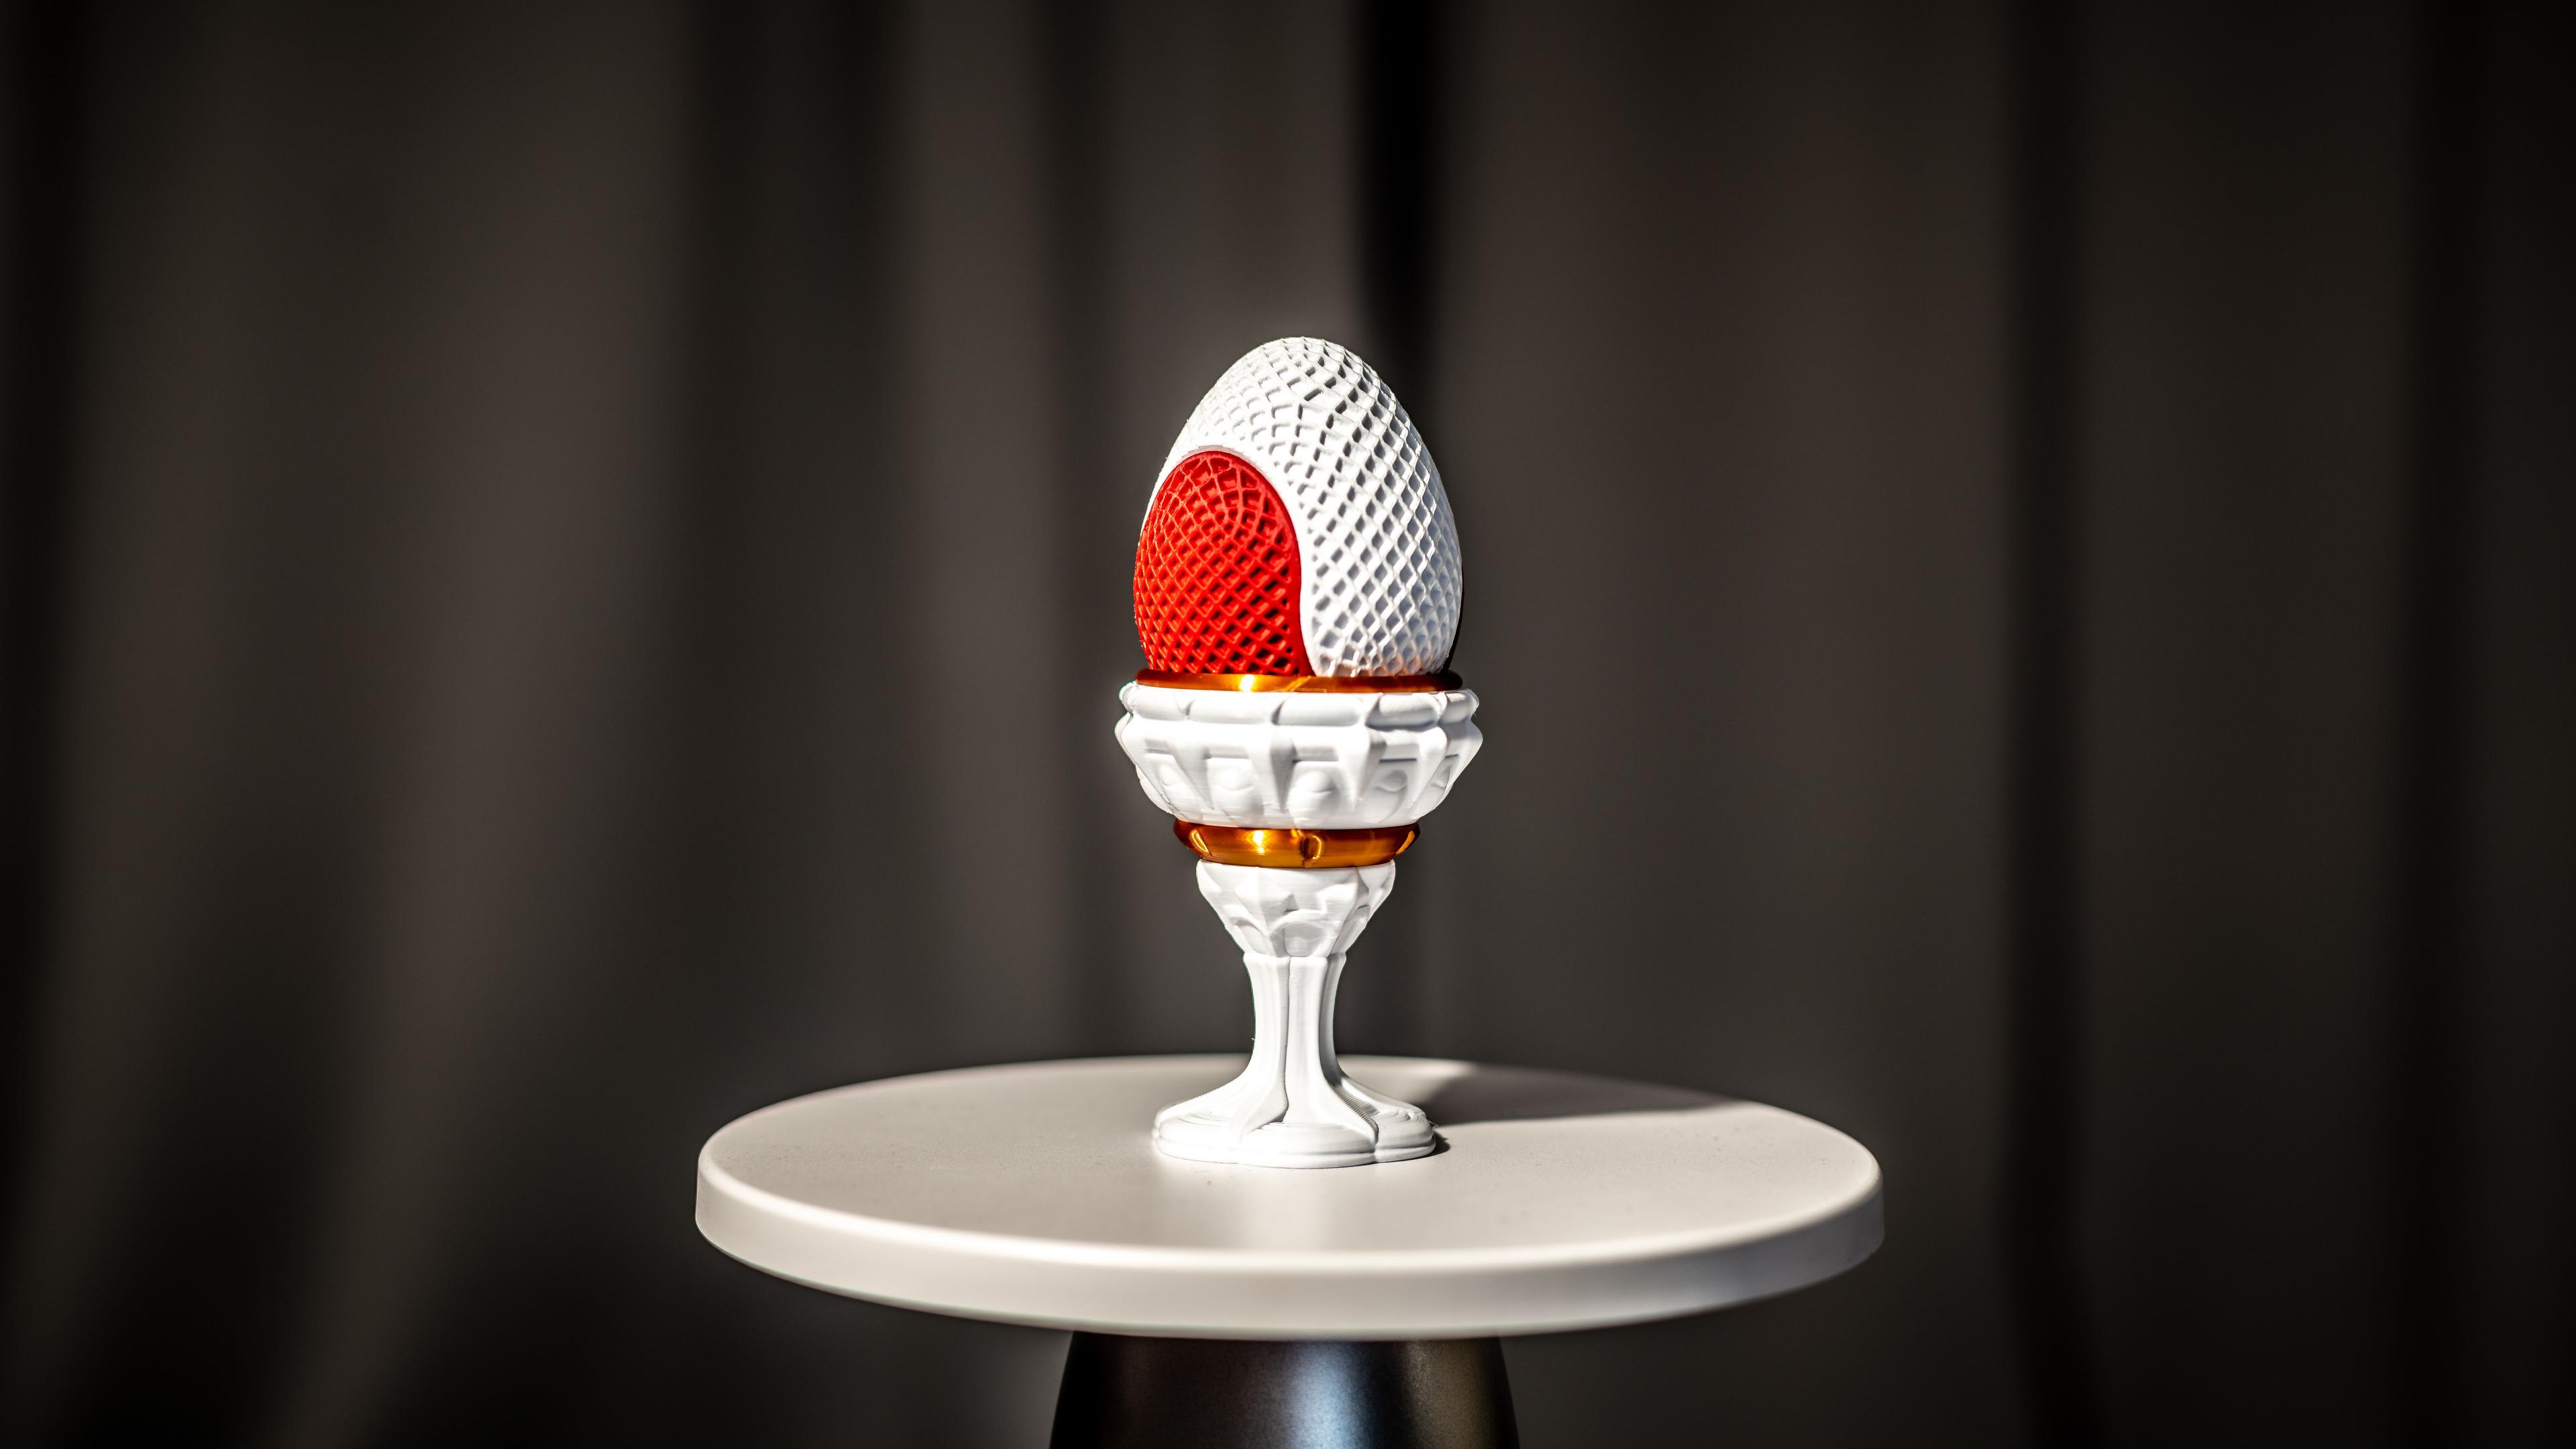 Royal Egg Cup - https://youtu.be/ieB-NhSHWT0 - 3d model